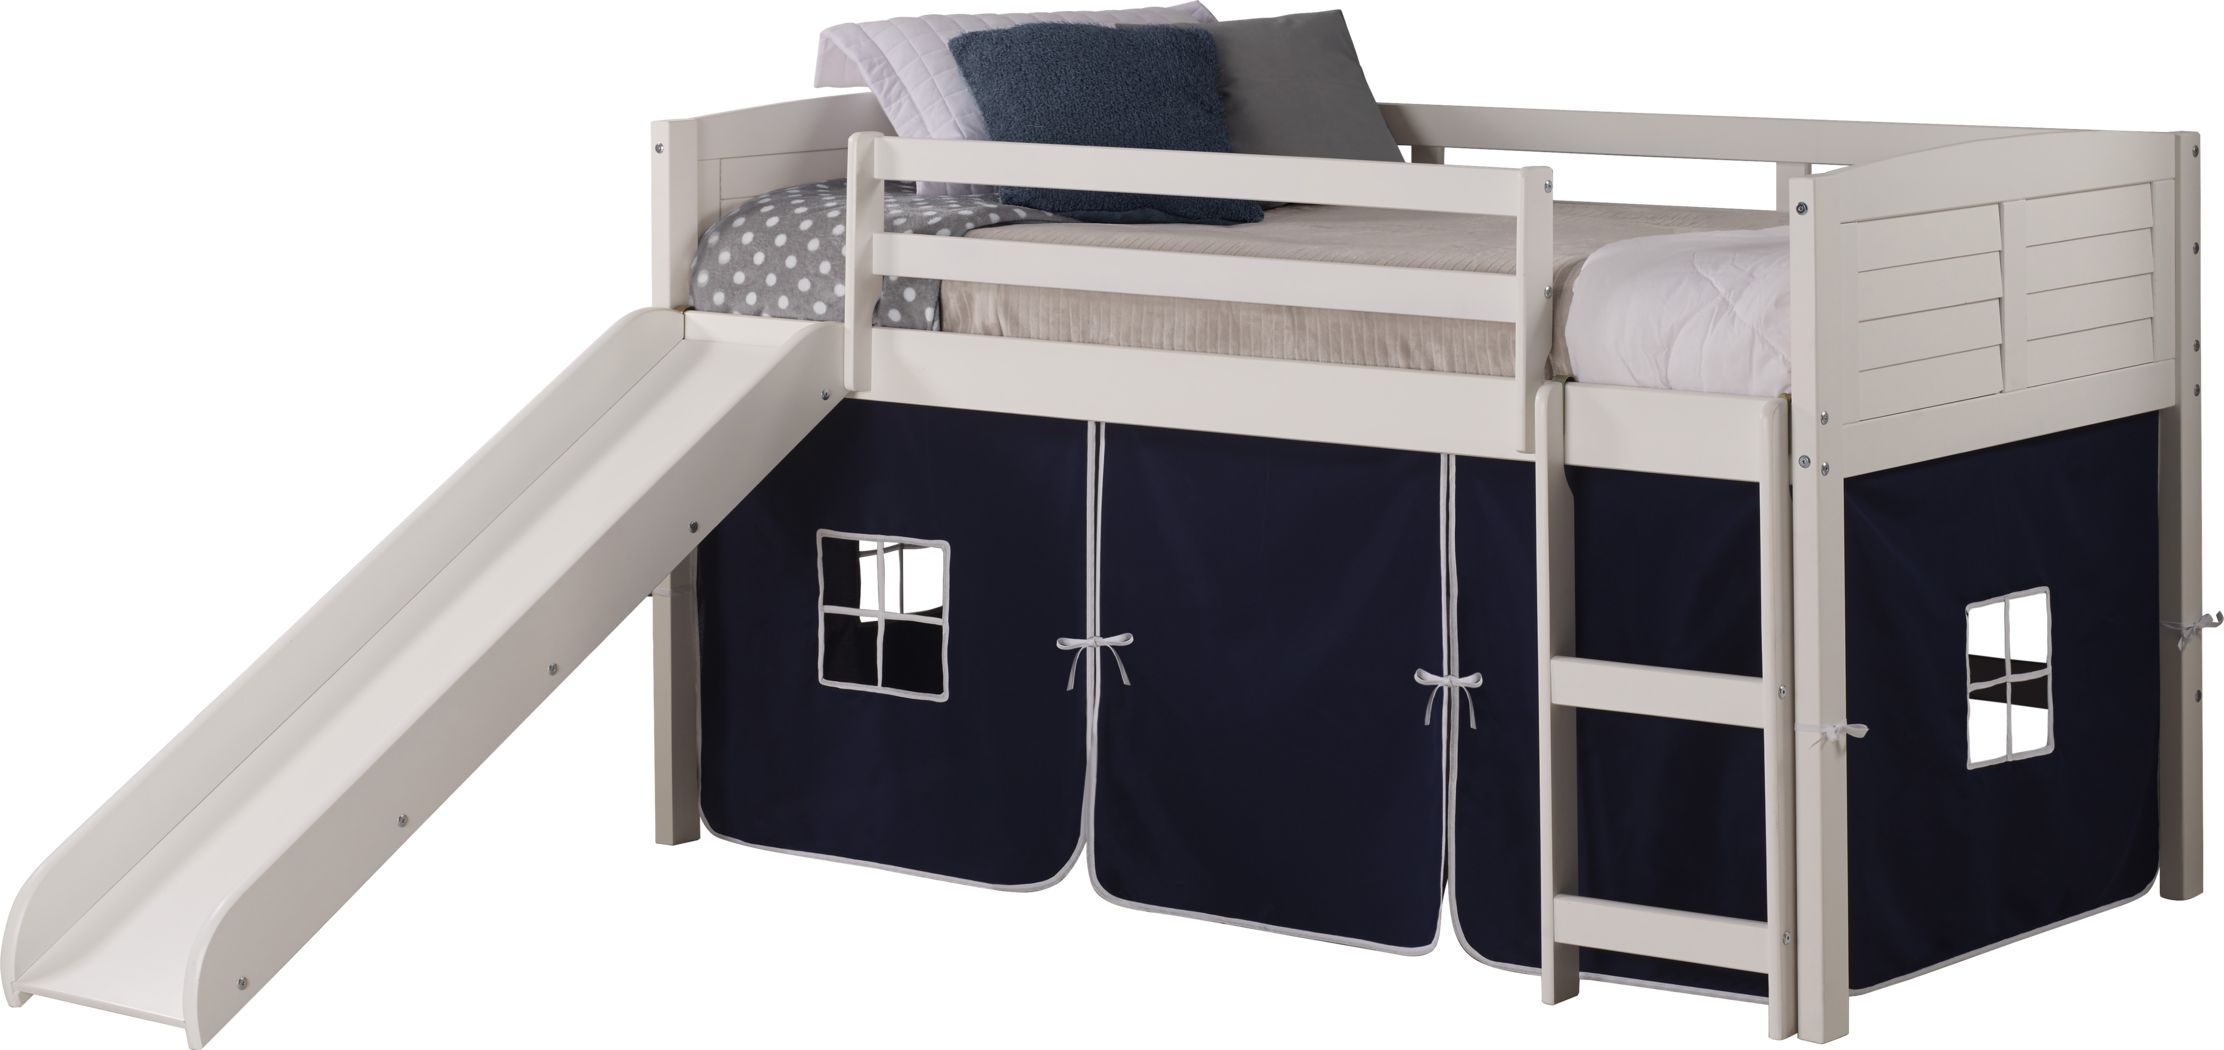 Junior Loft Bed Tent Idardarjisamaj Com, Twin Bunk Bed Canopy